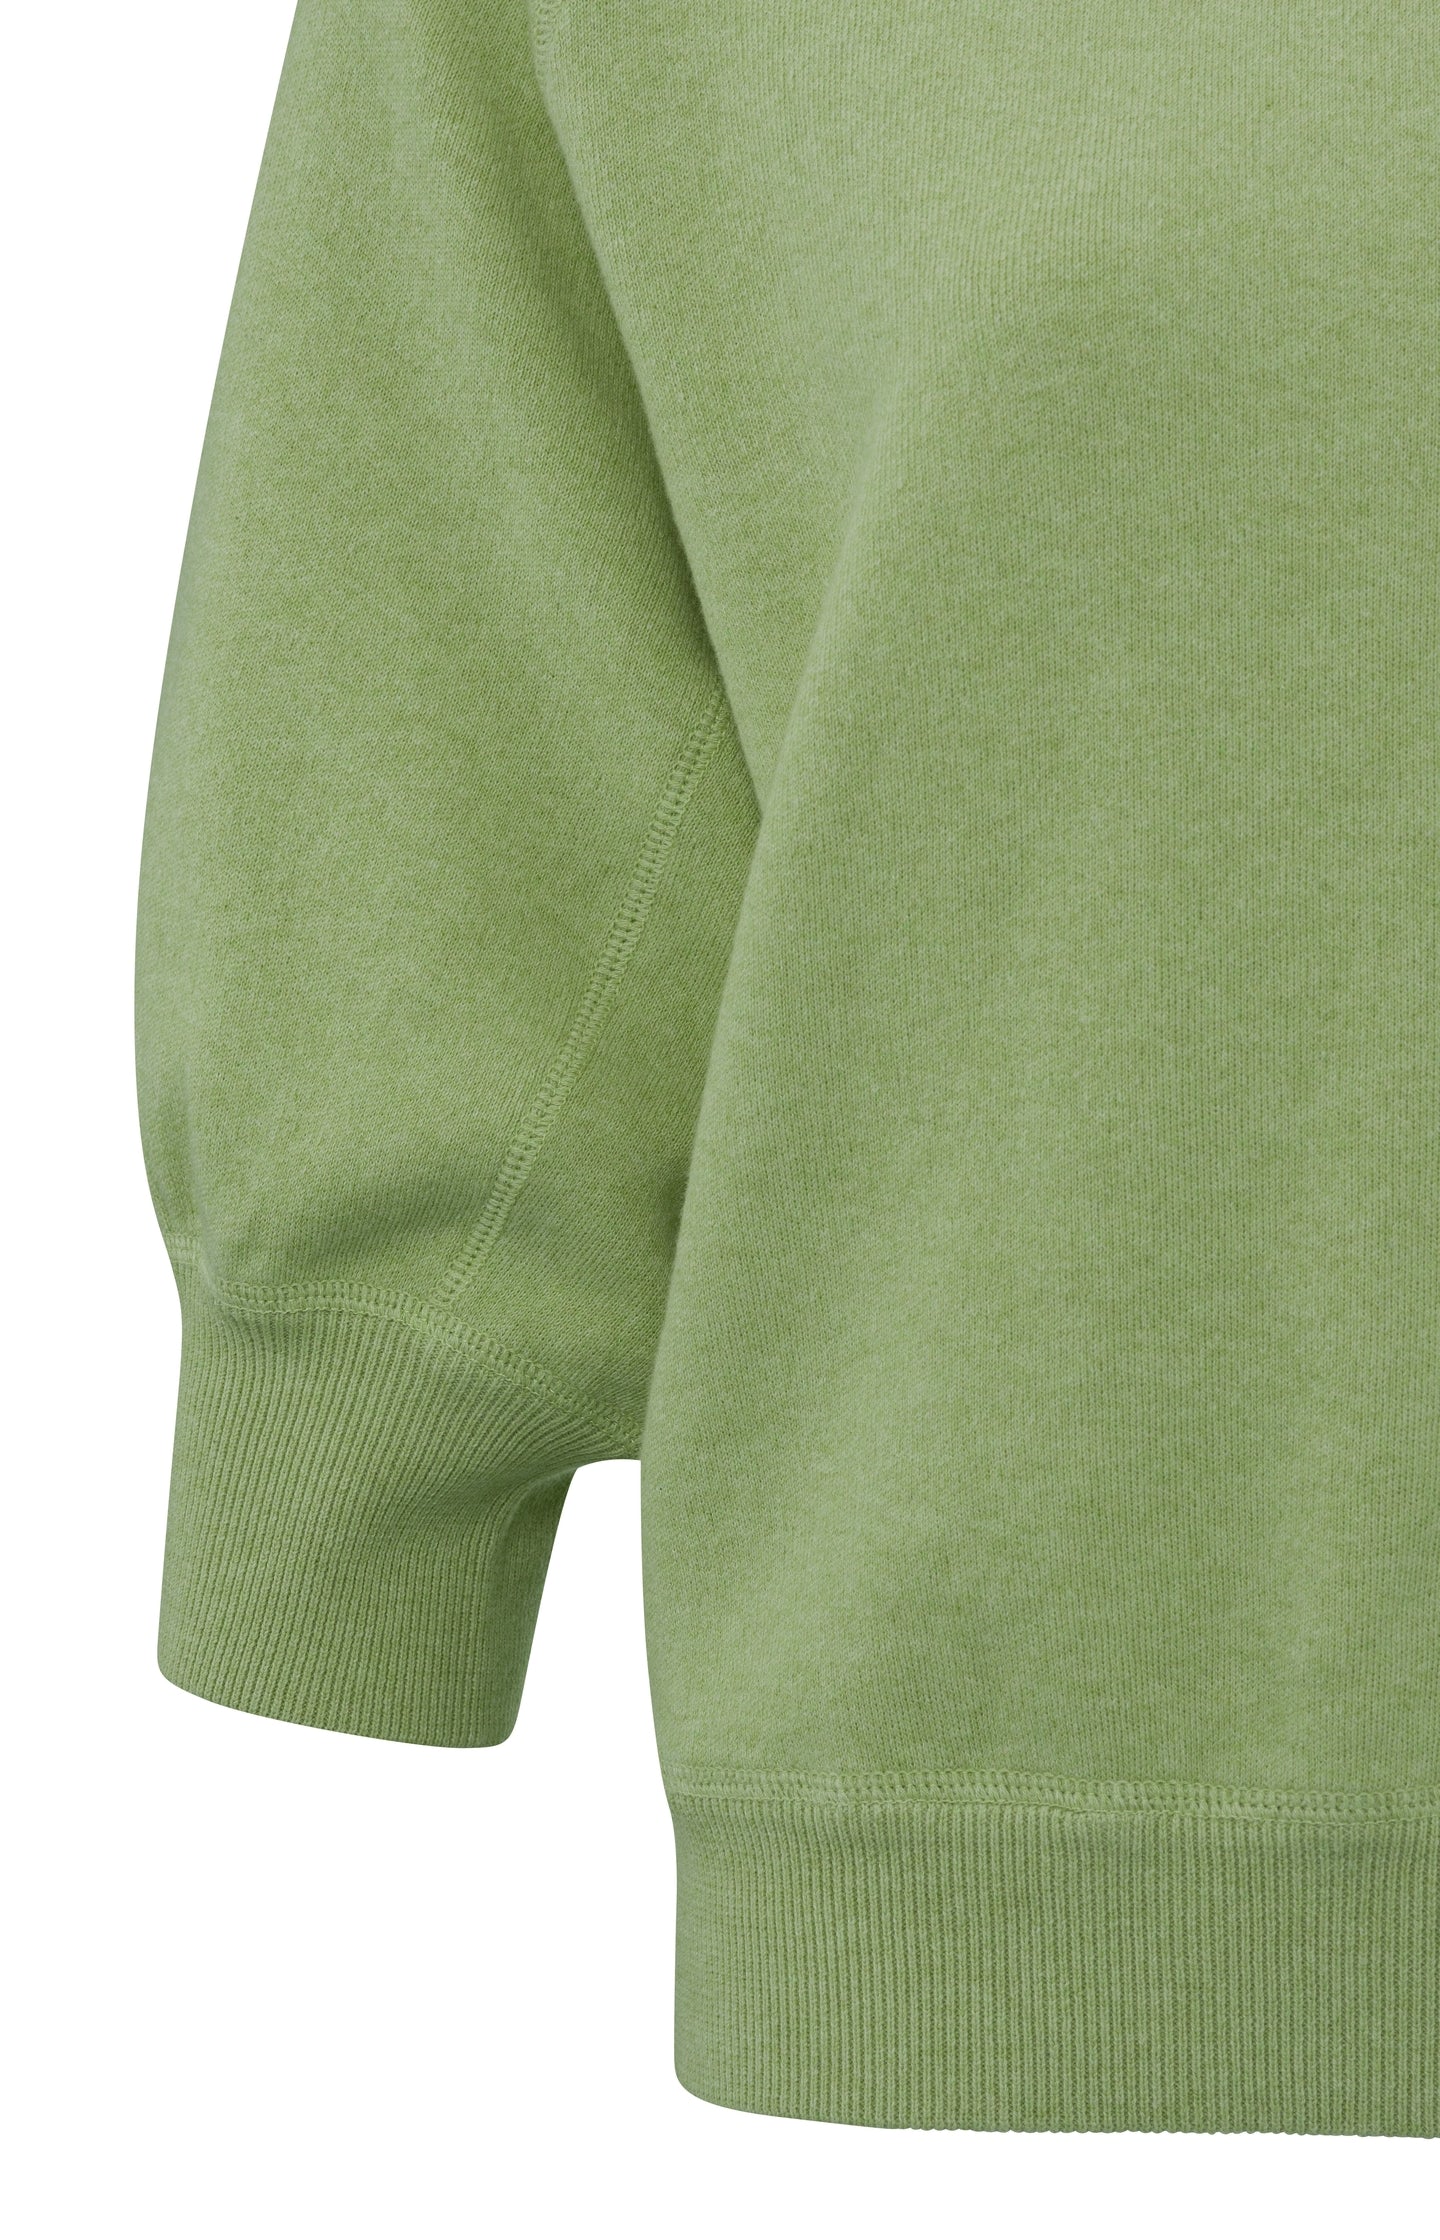 Raglan Sleeve Sweater in Green Melange